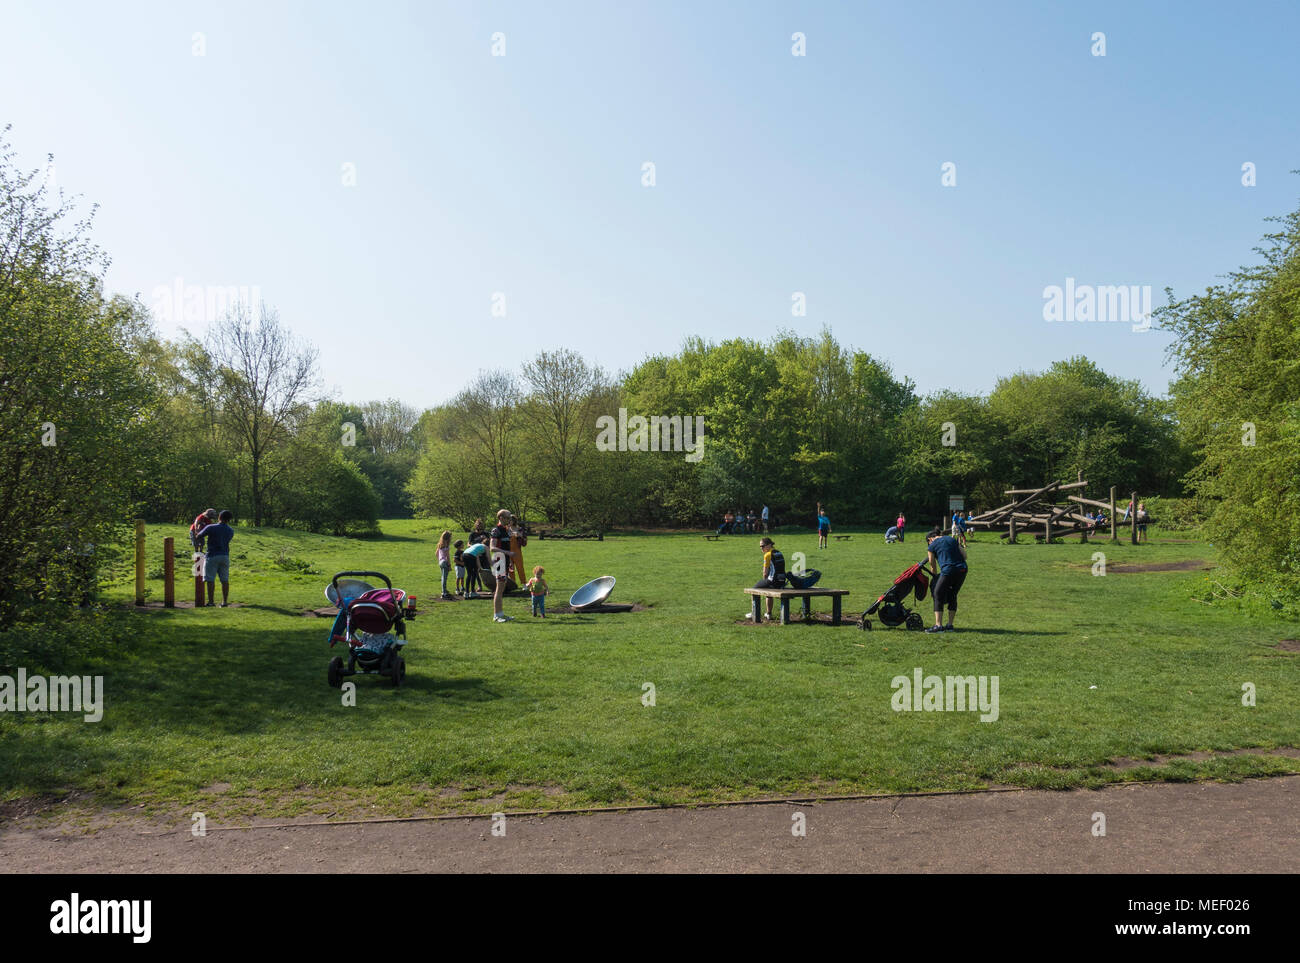 people enjoying Milton park play area Stock Photo